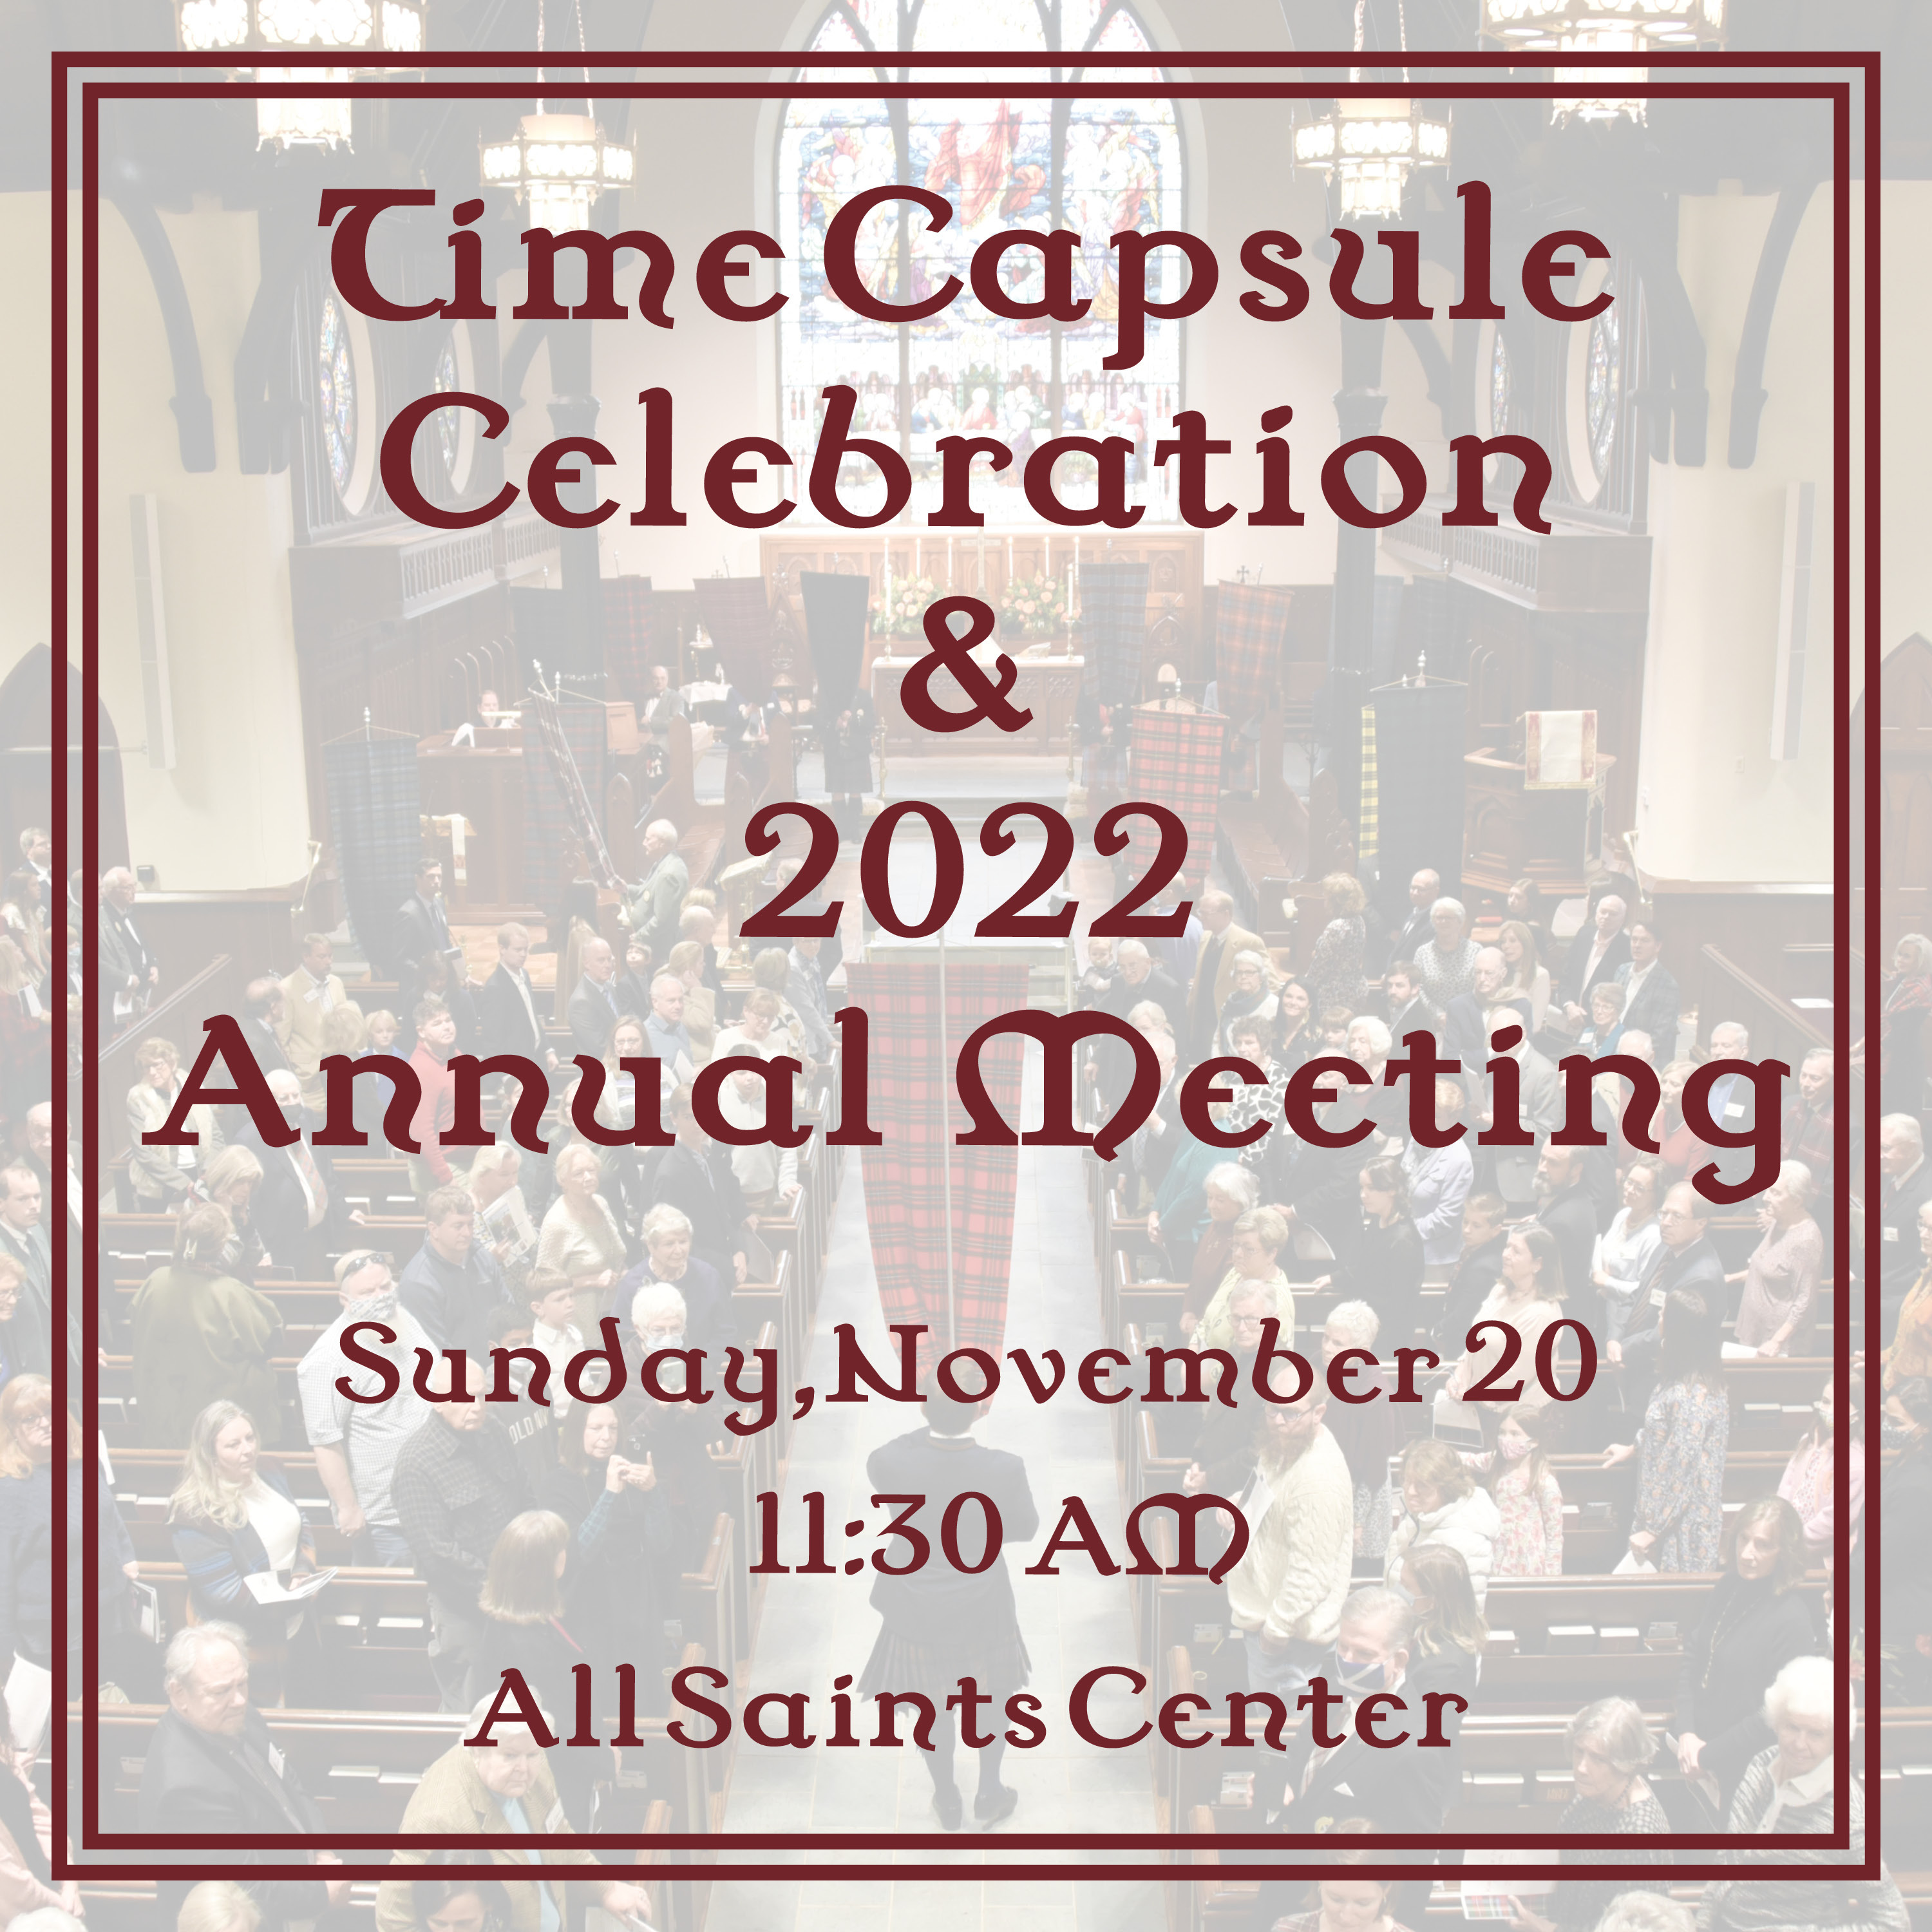 Christ Church Time Capsule Celebration